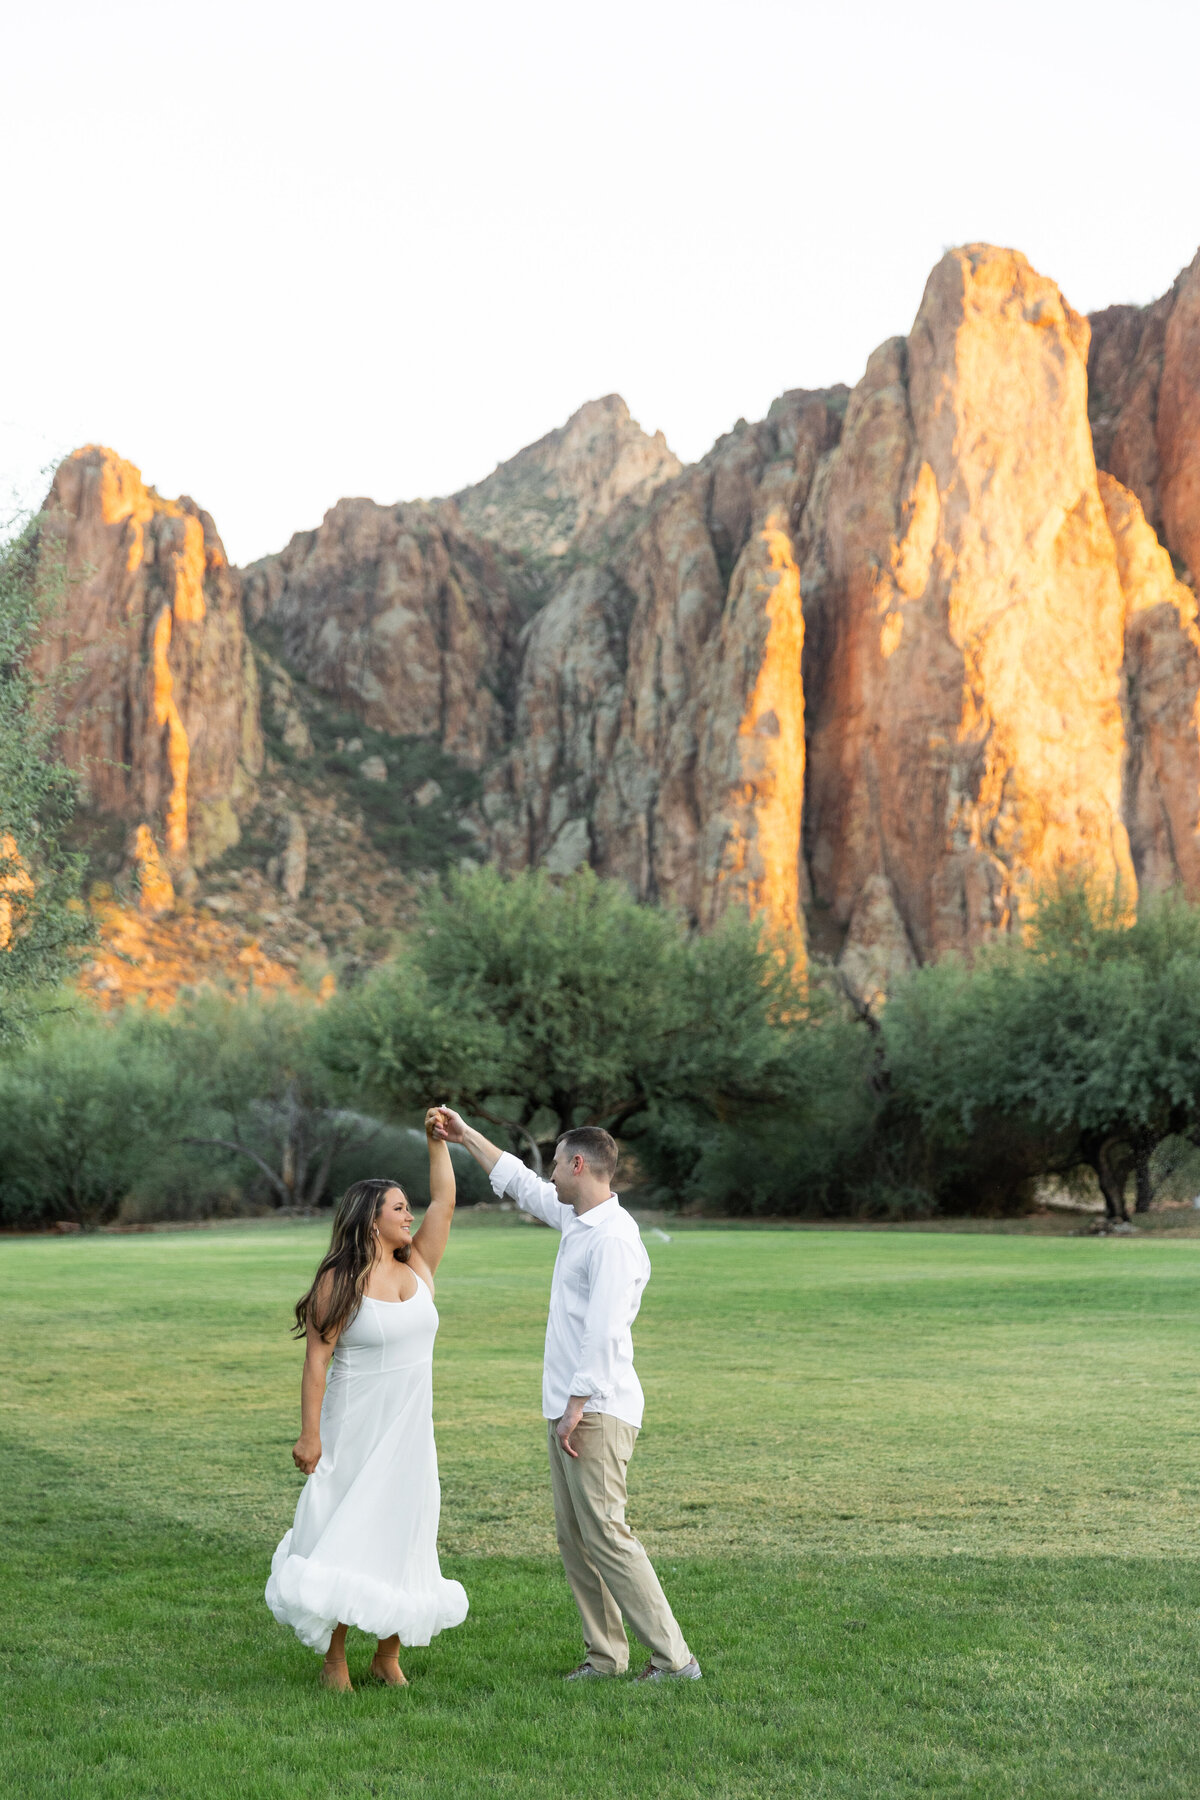 Karlie Colleen Photography - Kaitlyn & Cristian Engagement Session - Salt River Arizona-365